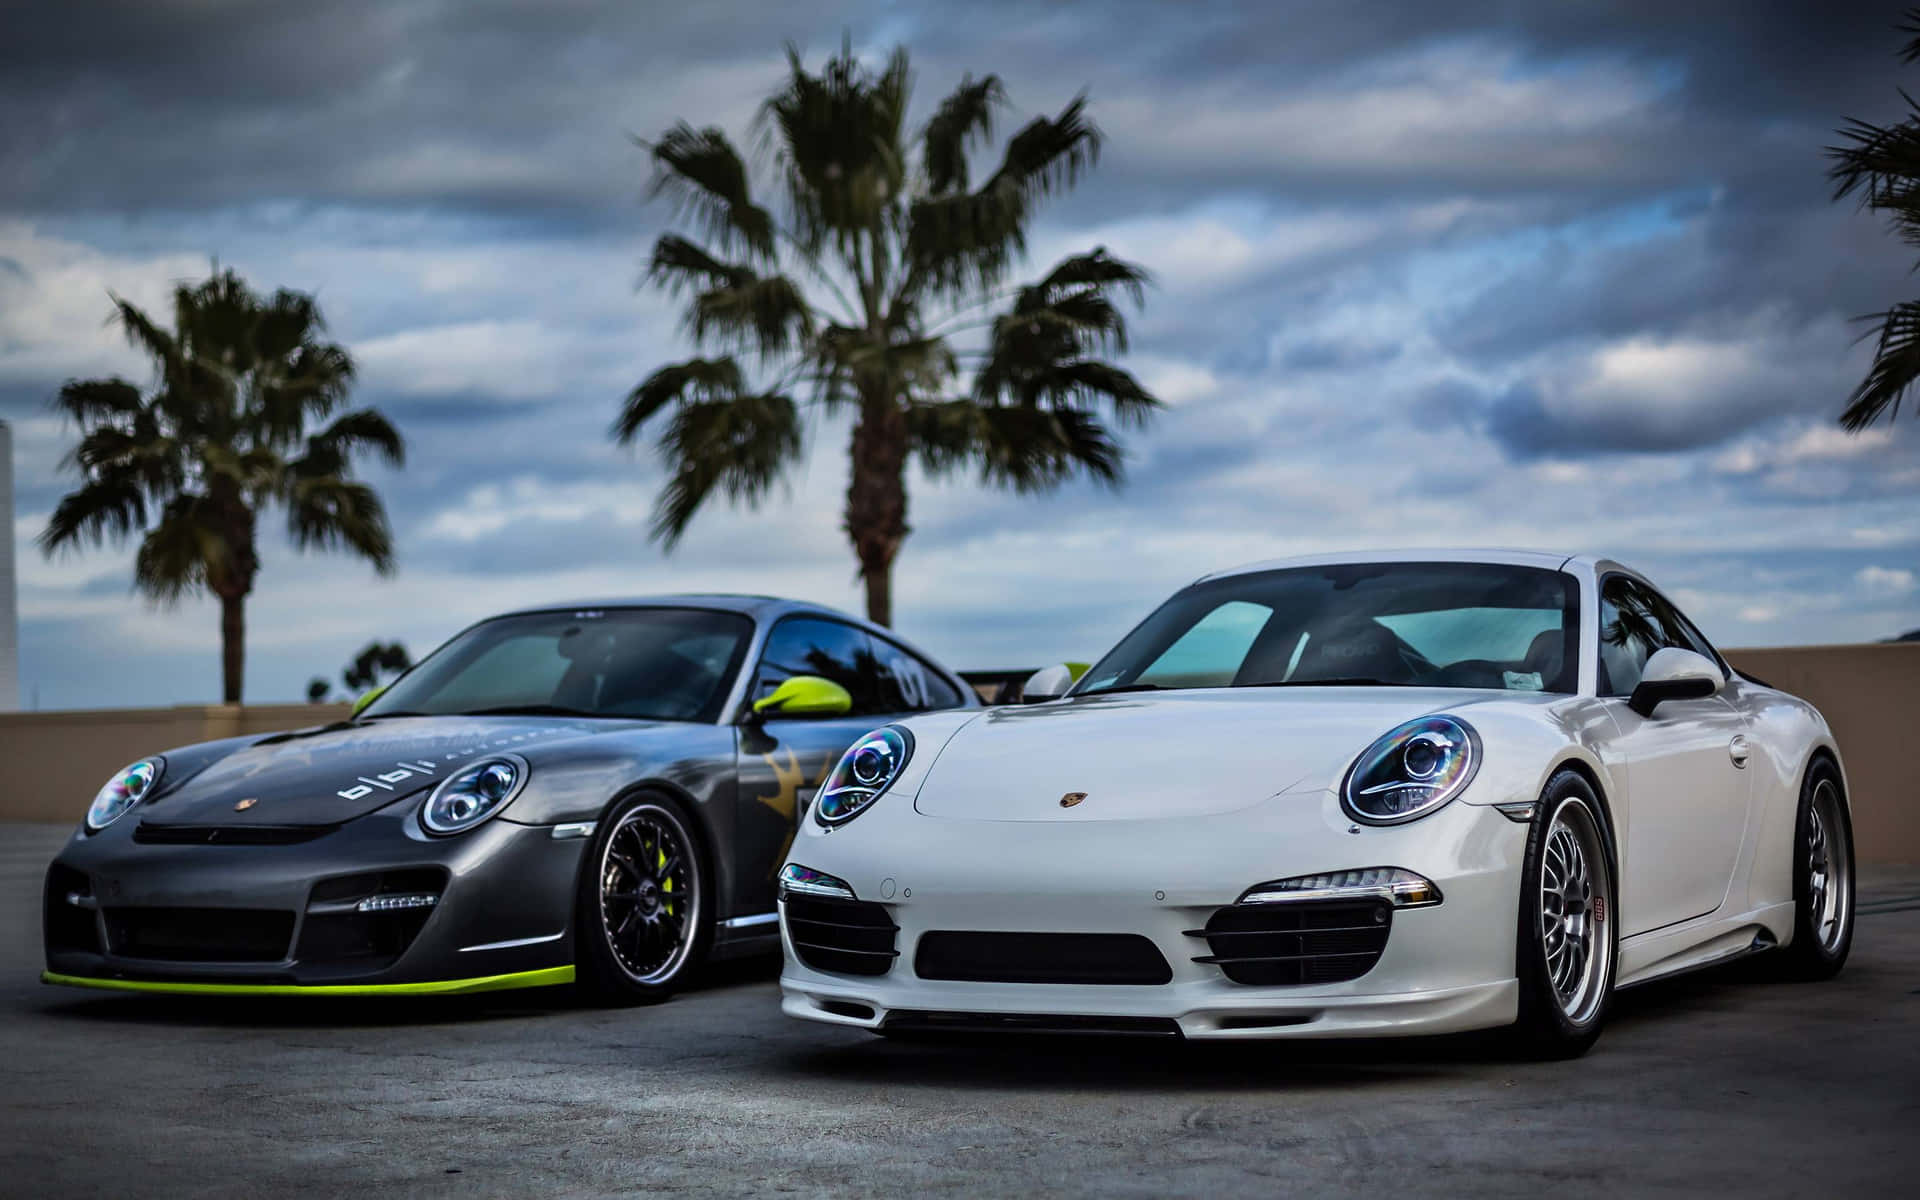 Impresionantecoche Deportivo Porsche En Una Ruta Escénica.